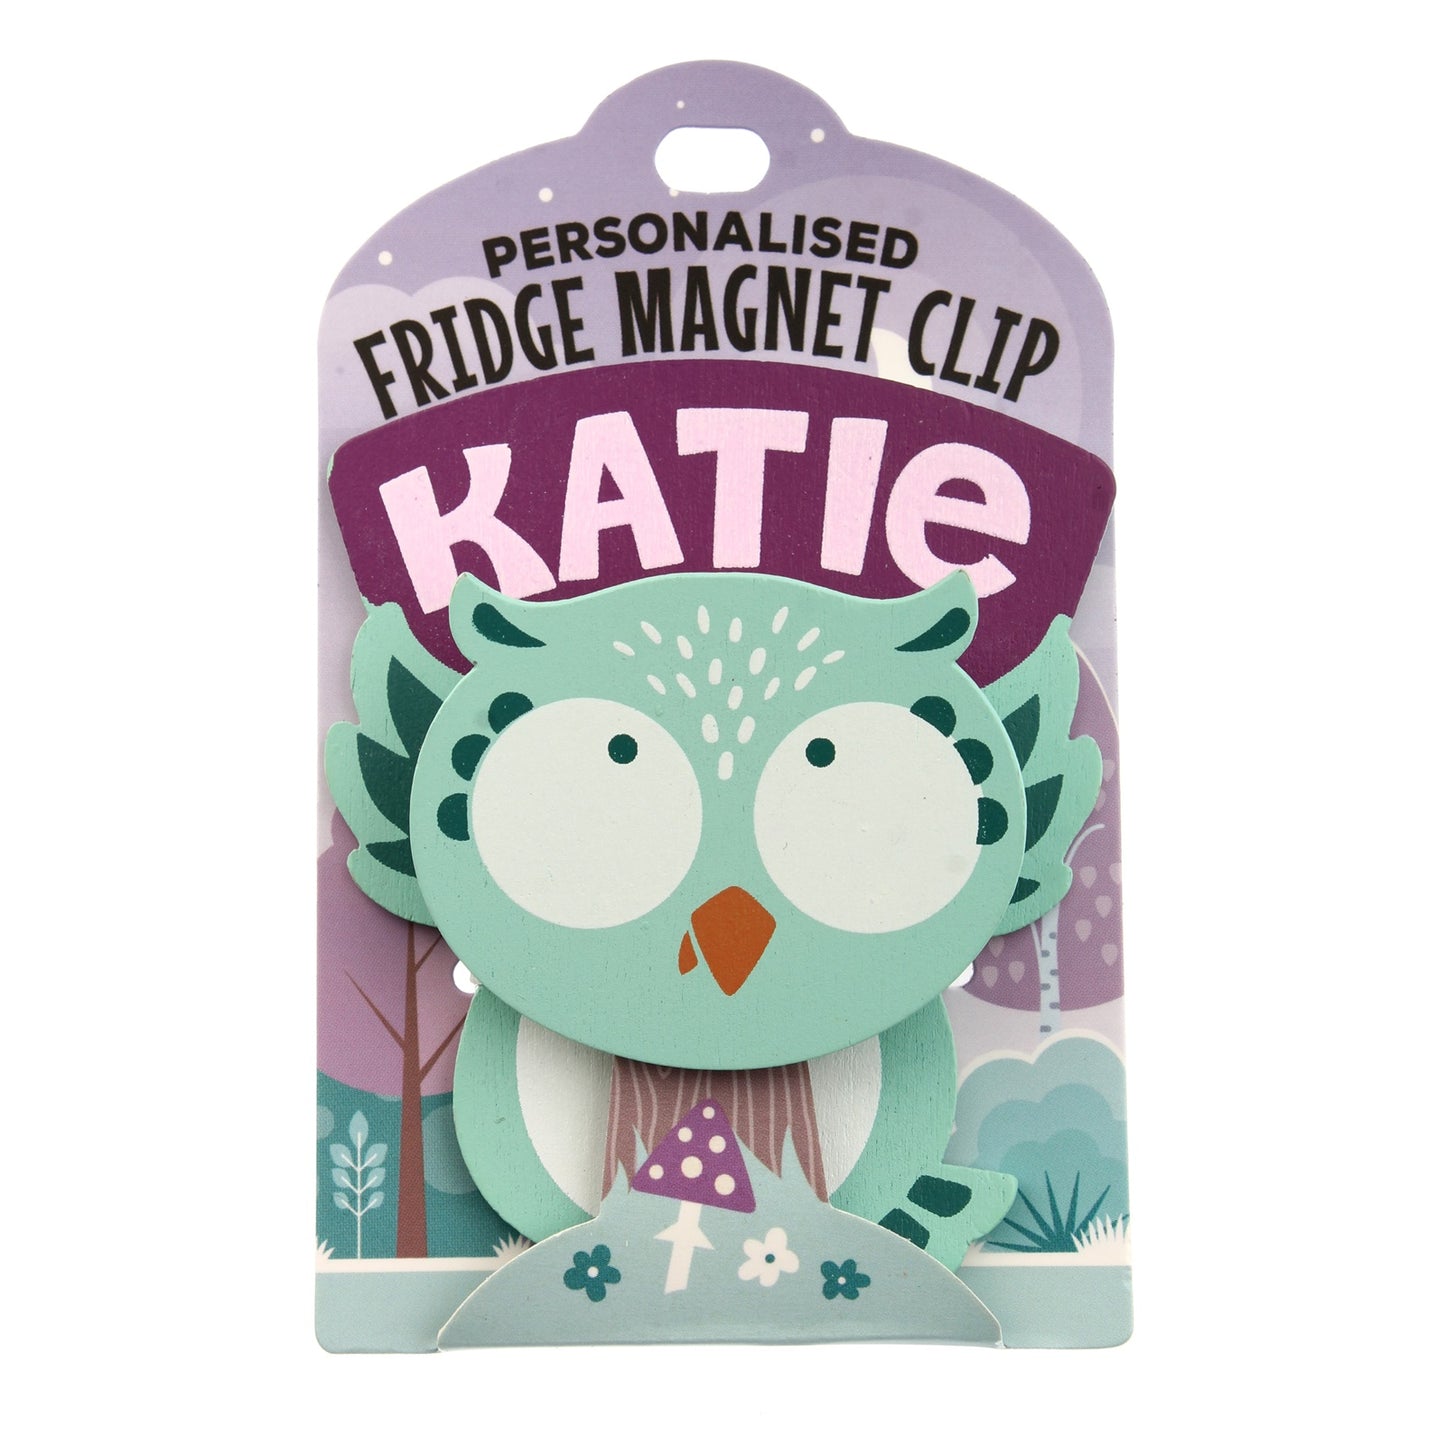 Fridge Magnet Clip Katie